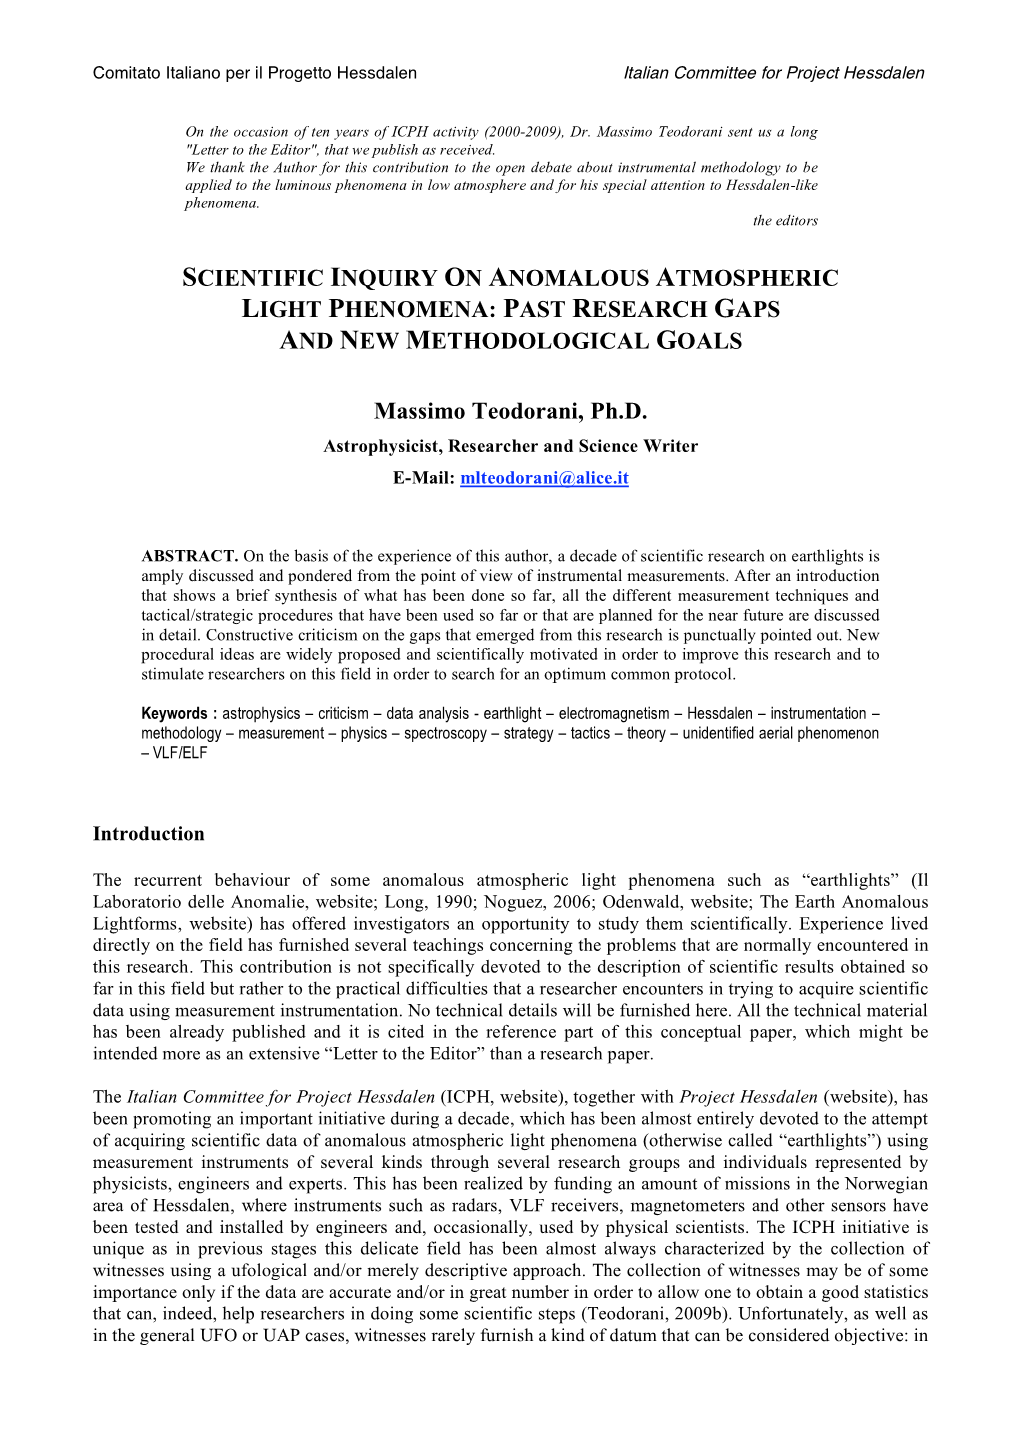 Scientific Inquiry on Anomalous Atmospheric Light Phenomena: Past Research Gaps and New Methodological Goals